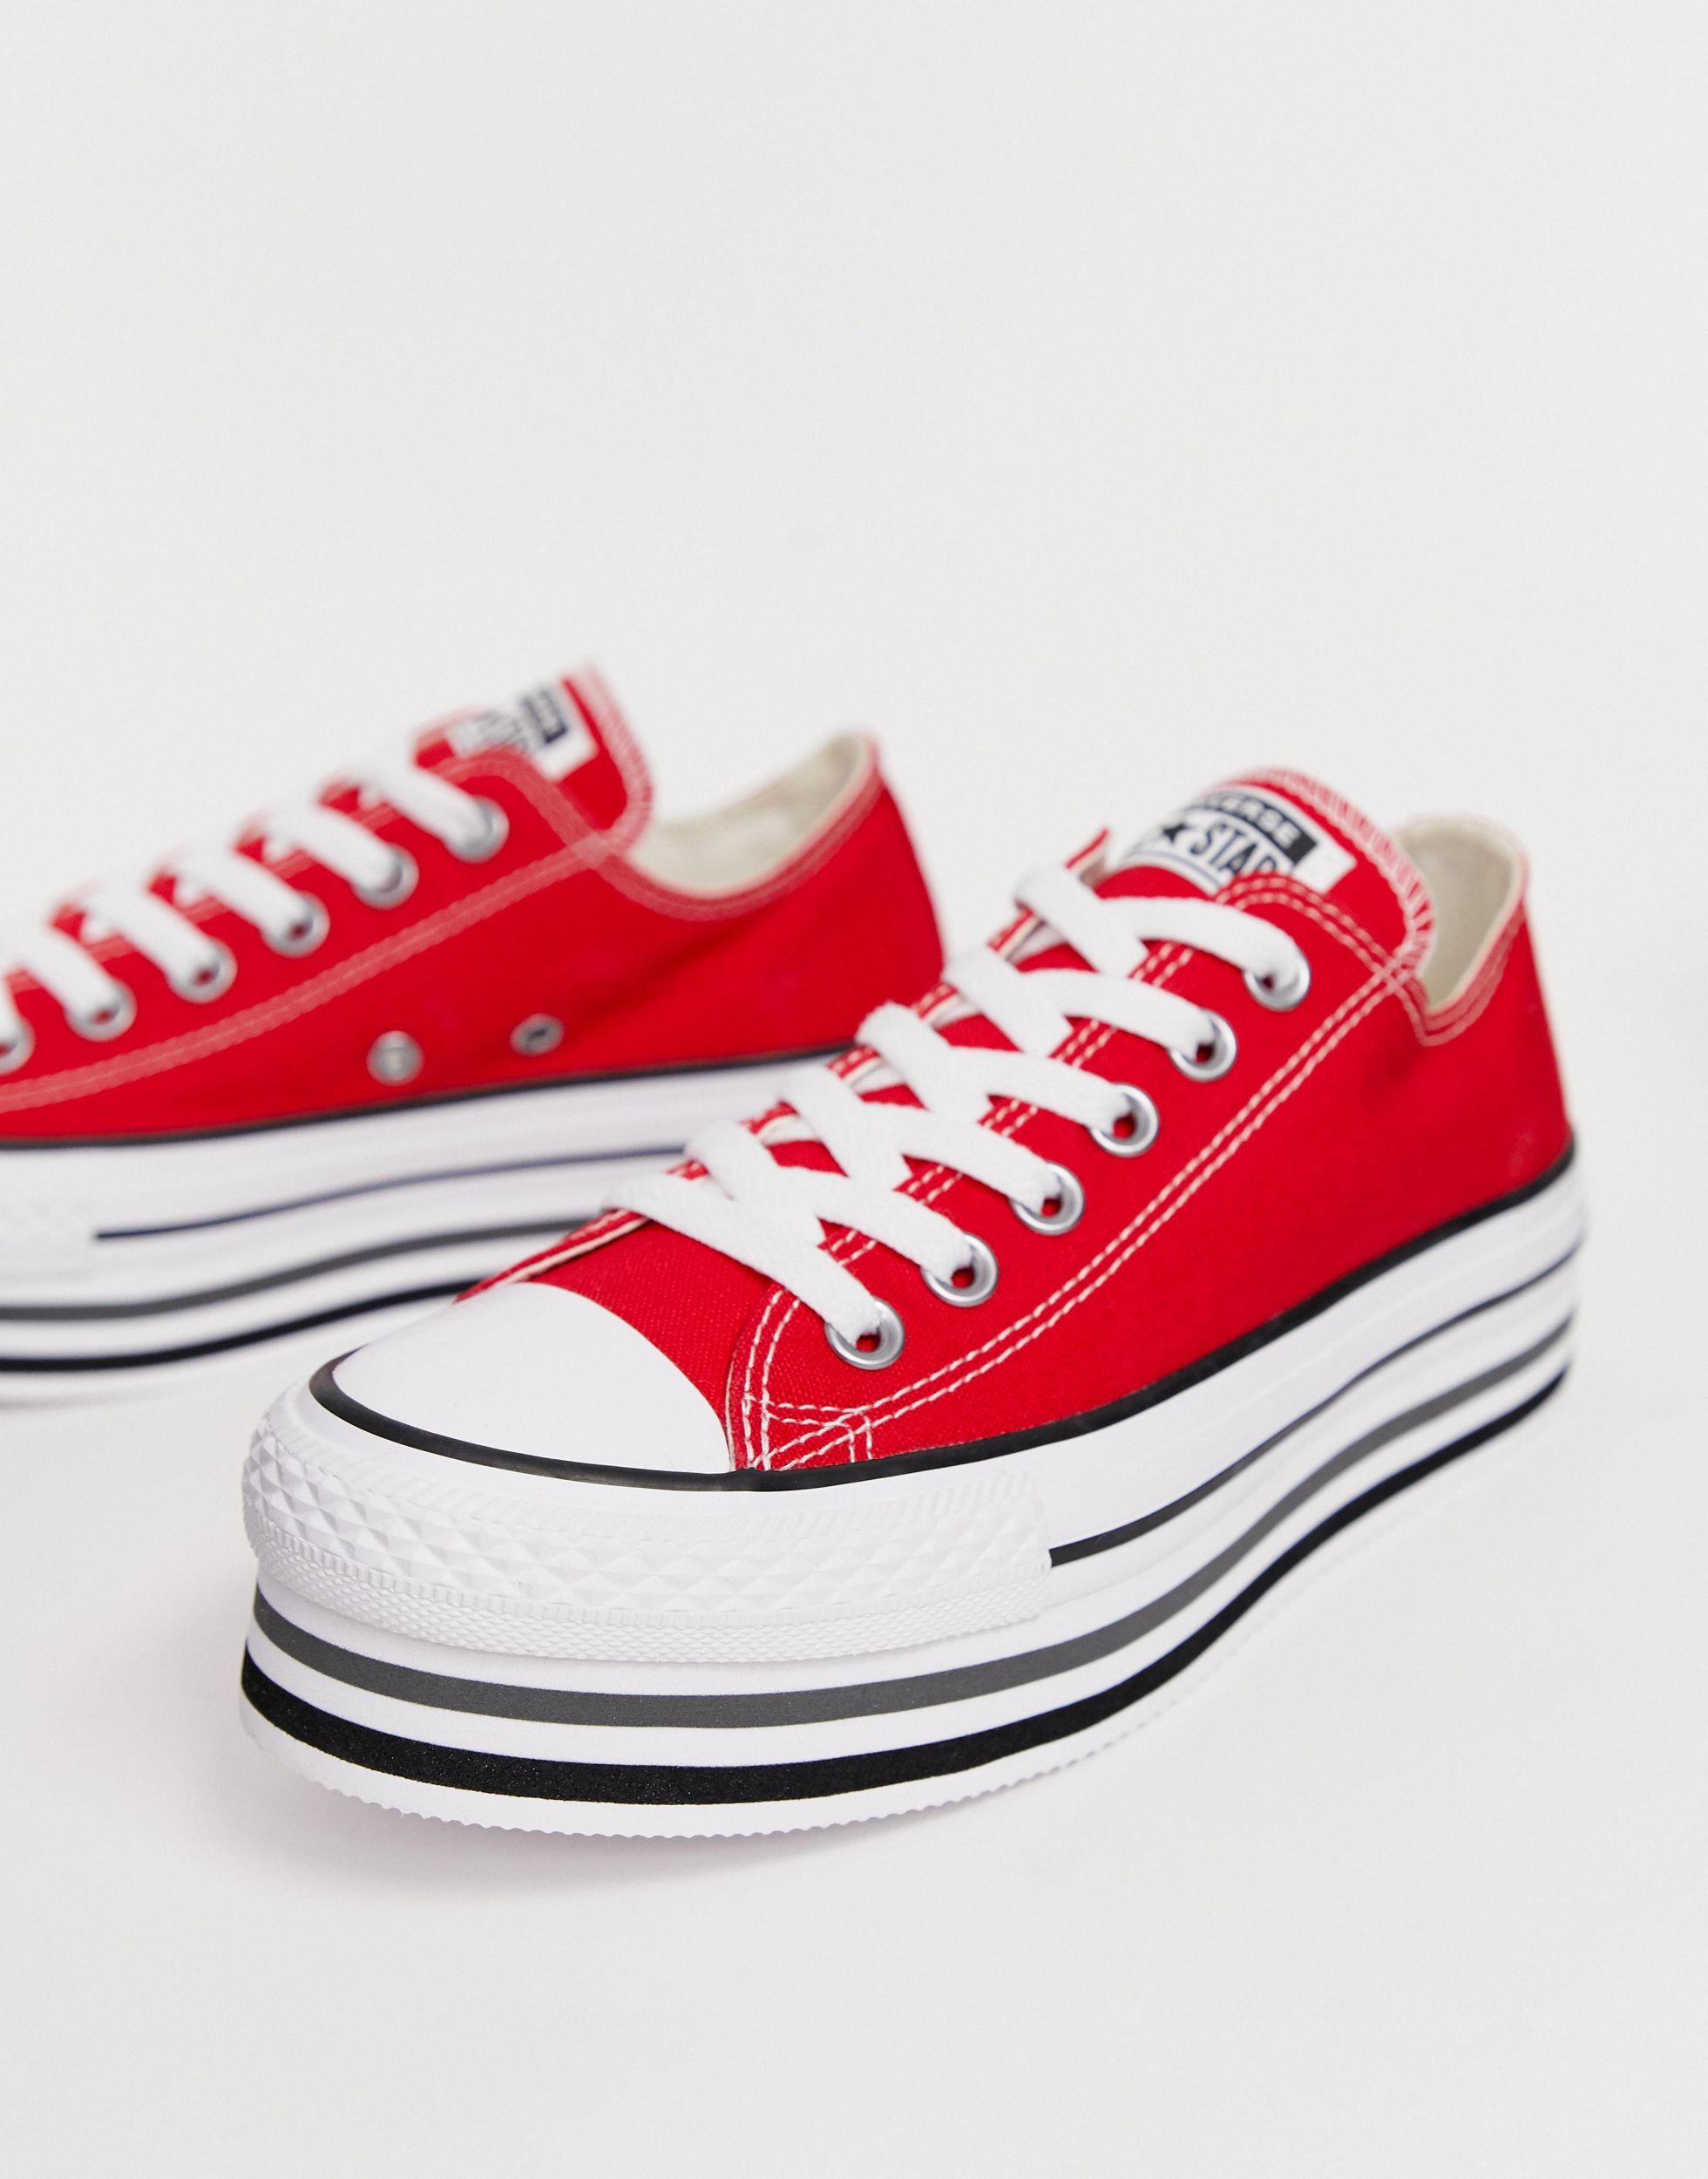 https://cdna.lystit.com/photos/asos/eea10d6c/converse-Red-Chuck-Taylor-All-Star-Platform-Layer-Red-Sneakers.jpeg